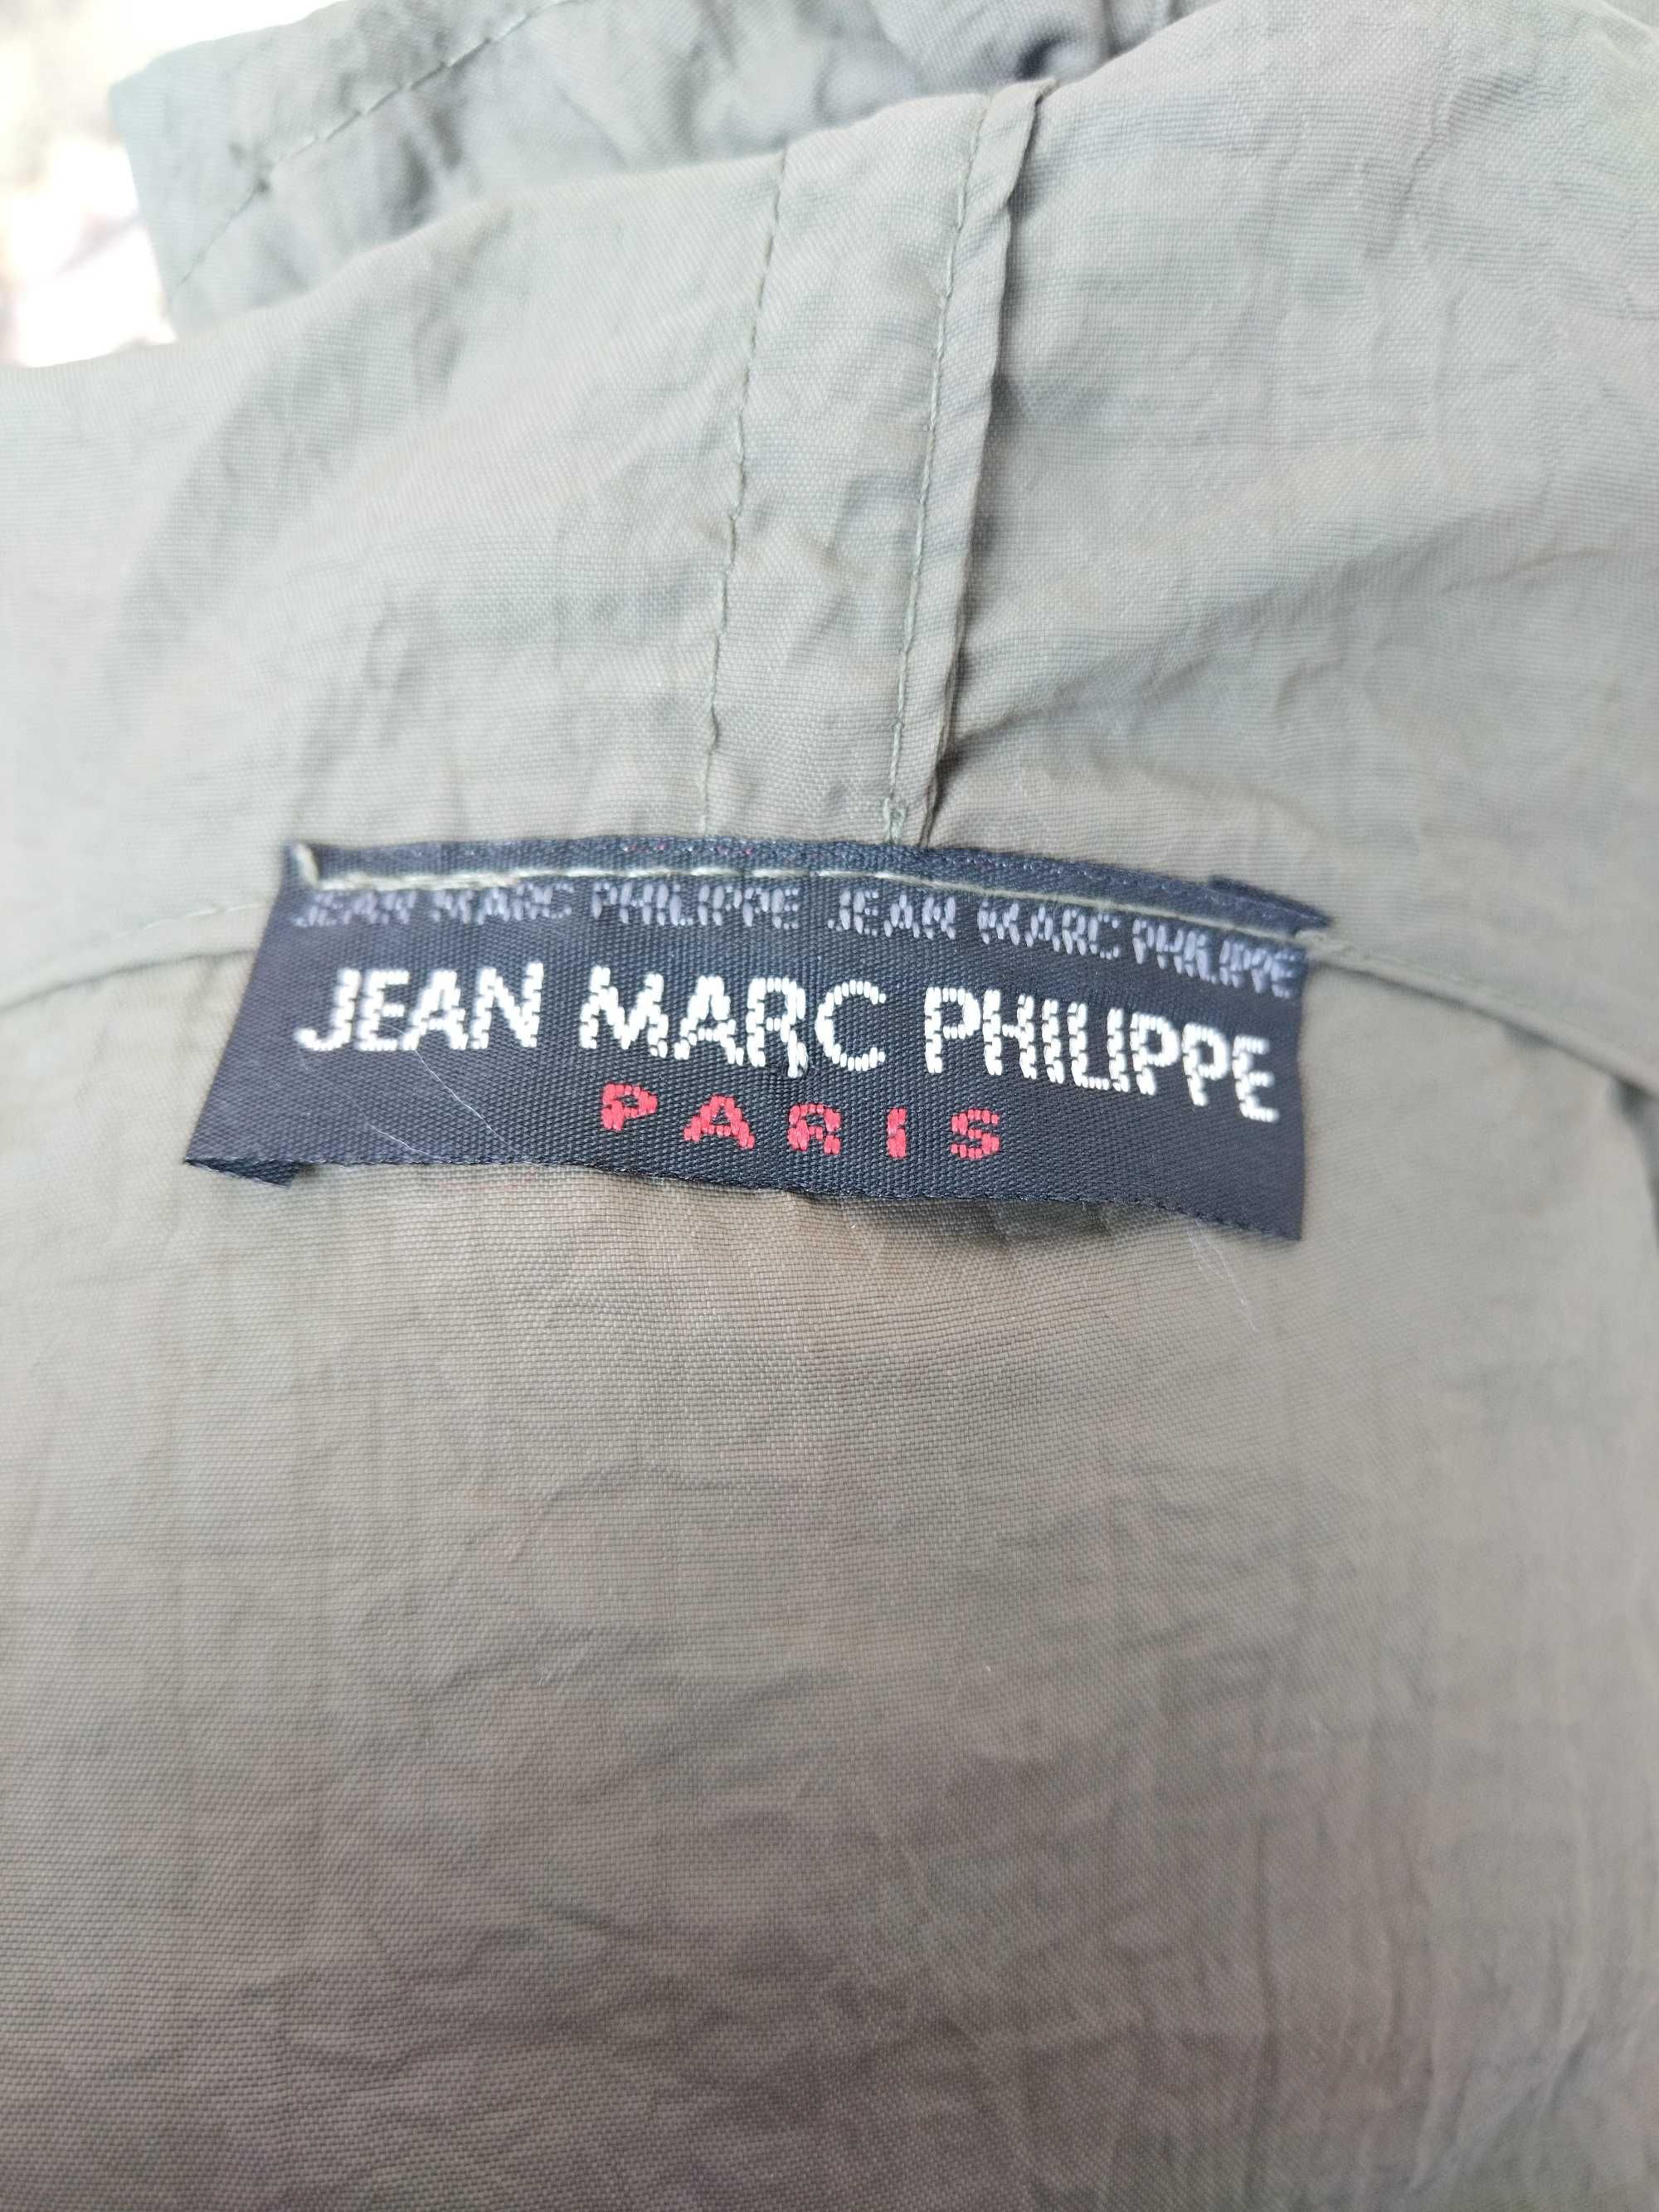 Jean Marc Philippe дизайнерский плащ, Франция. xxl